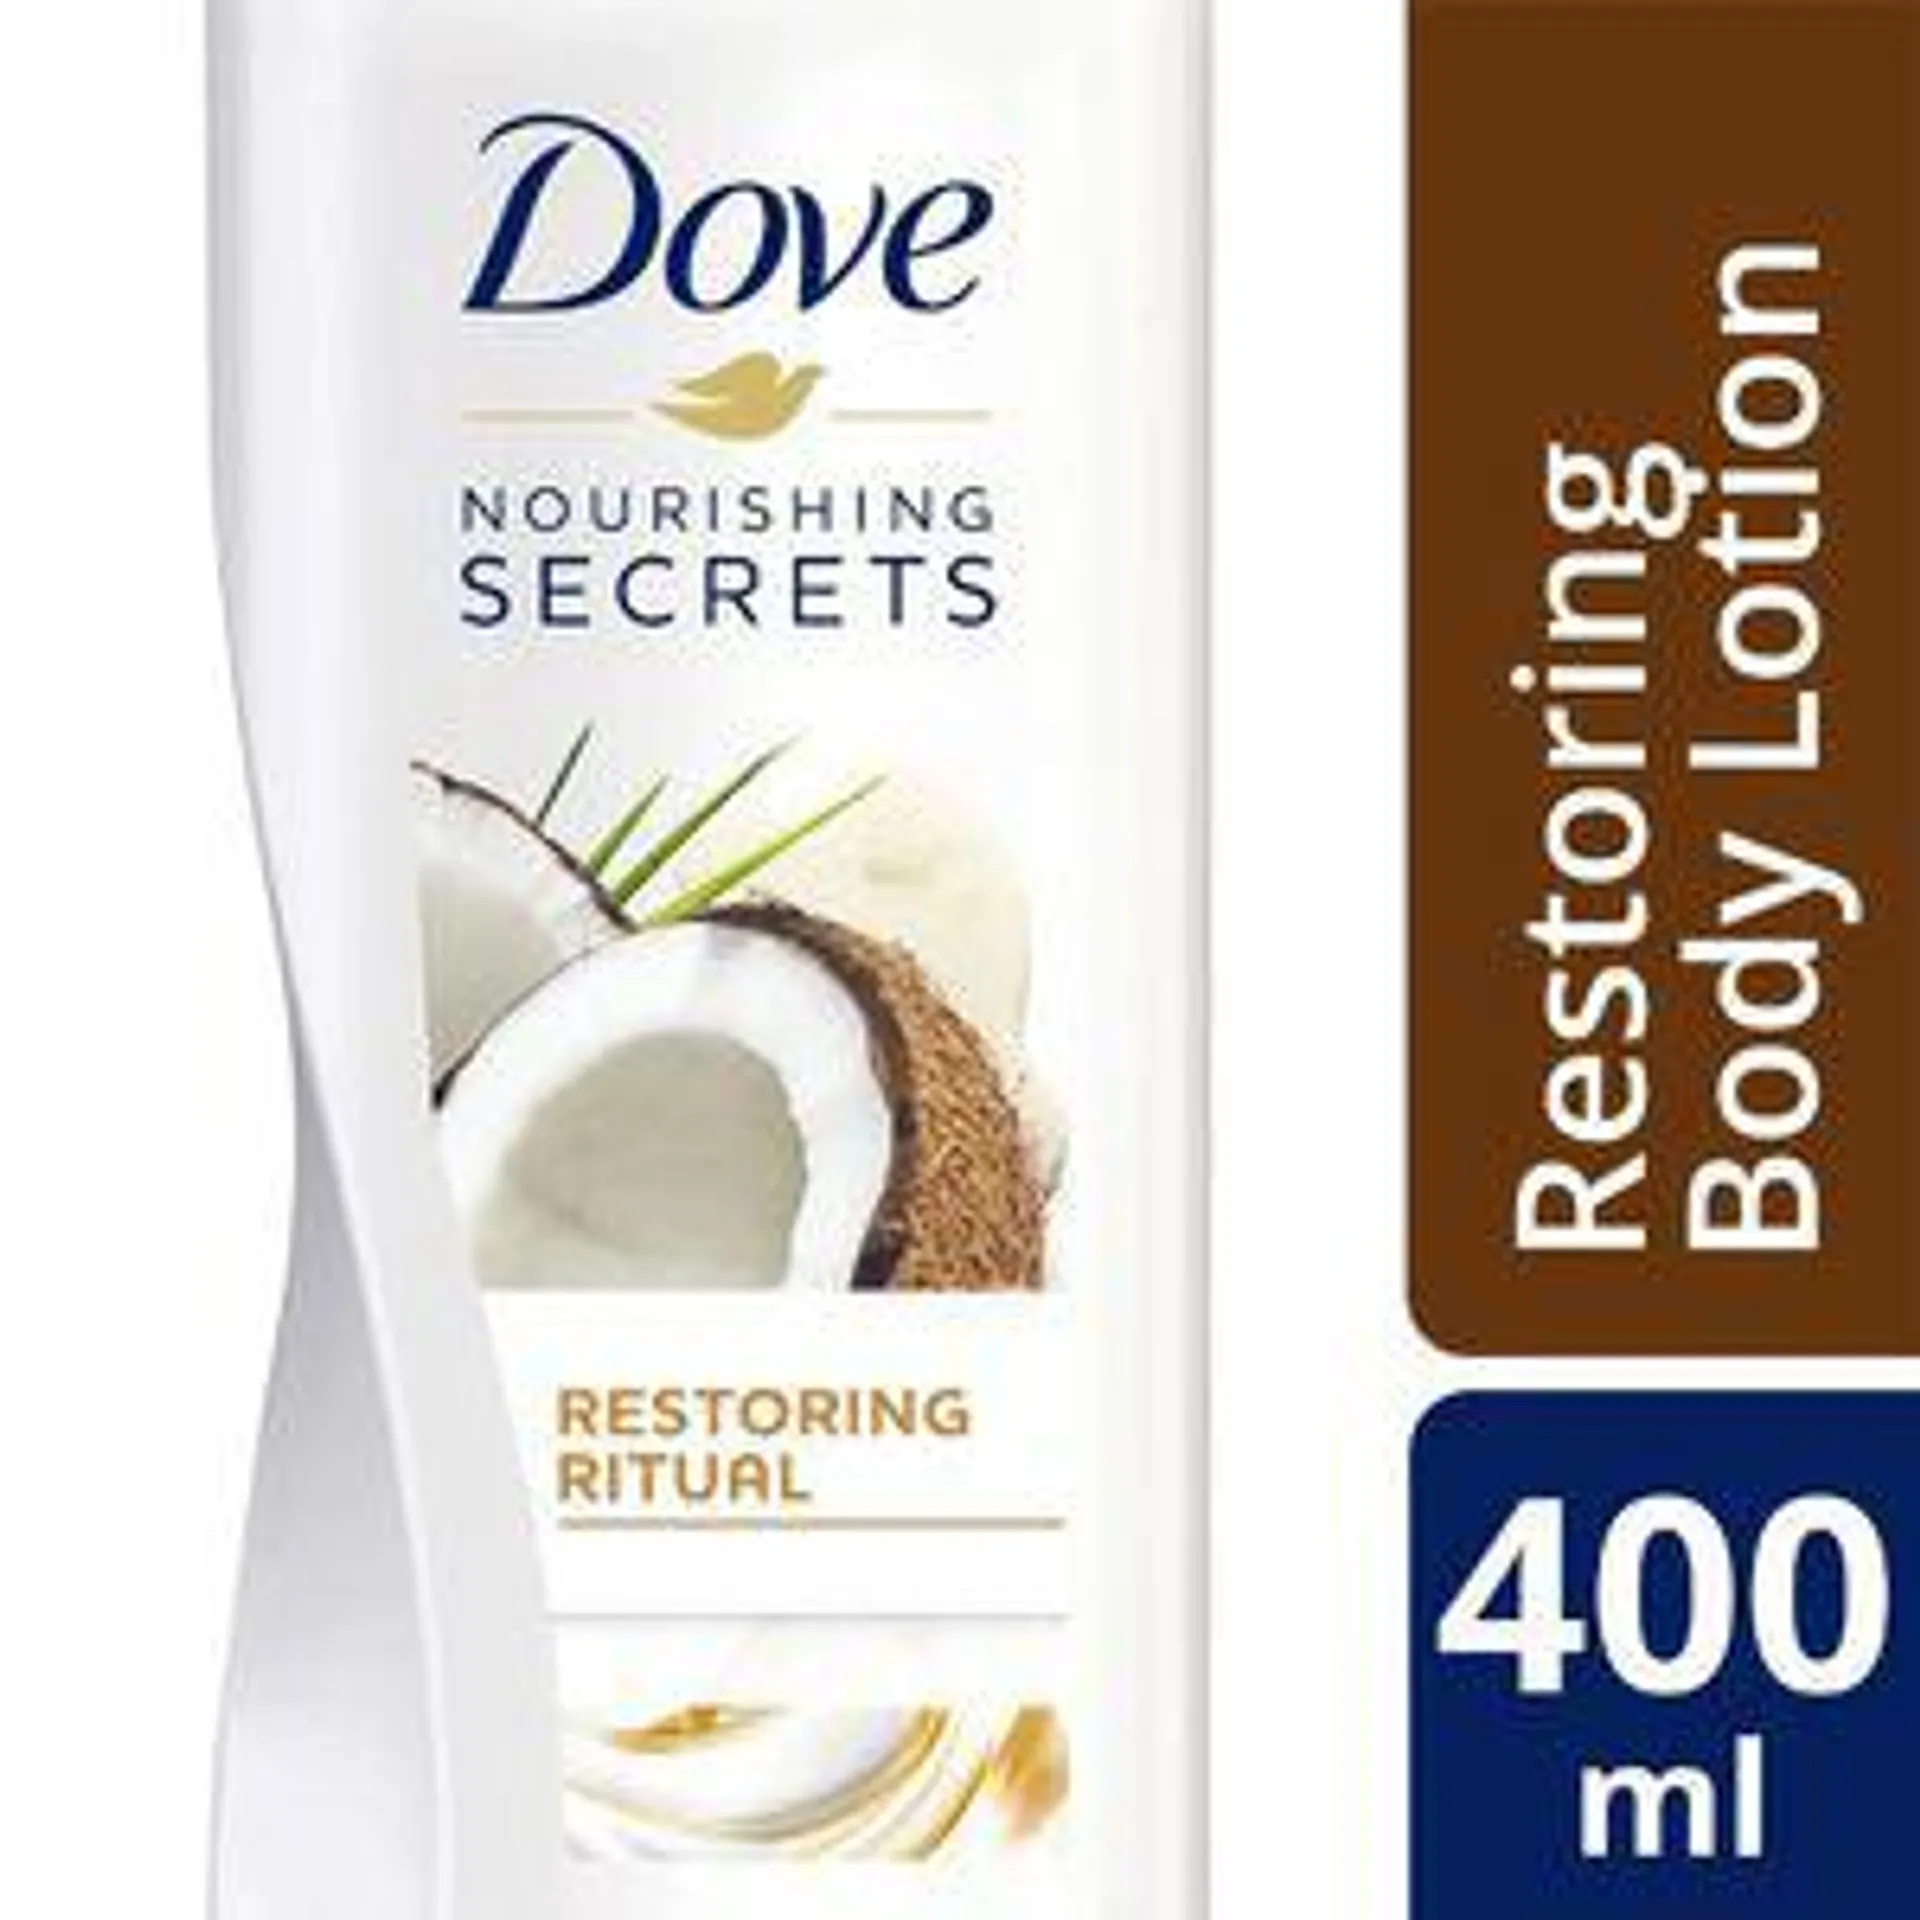 Dove Restoring Coconut Oil And Almond Milk Body Lotion 400ml